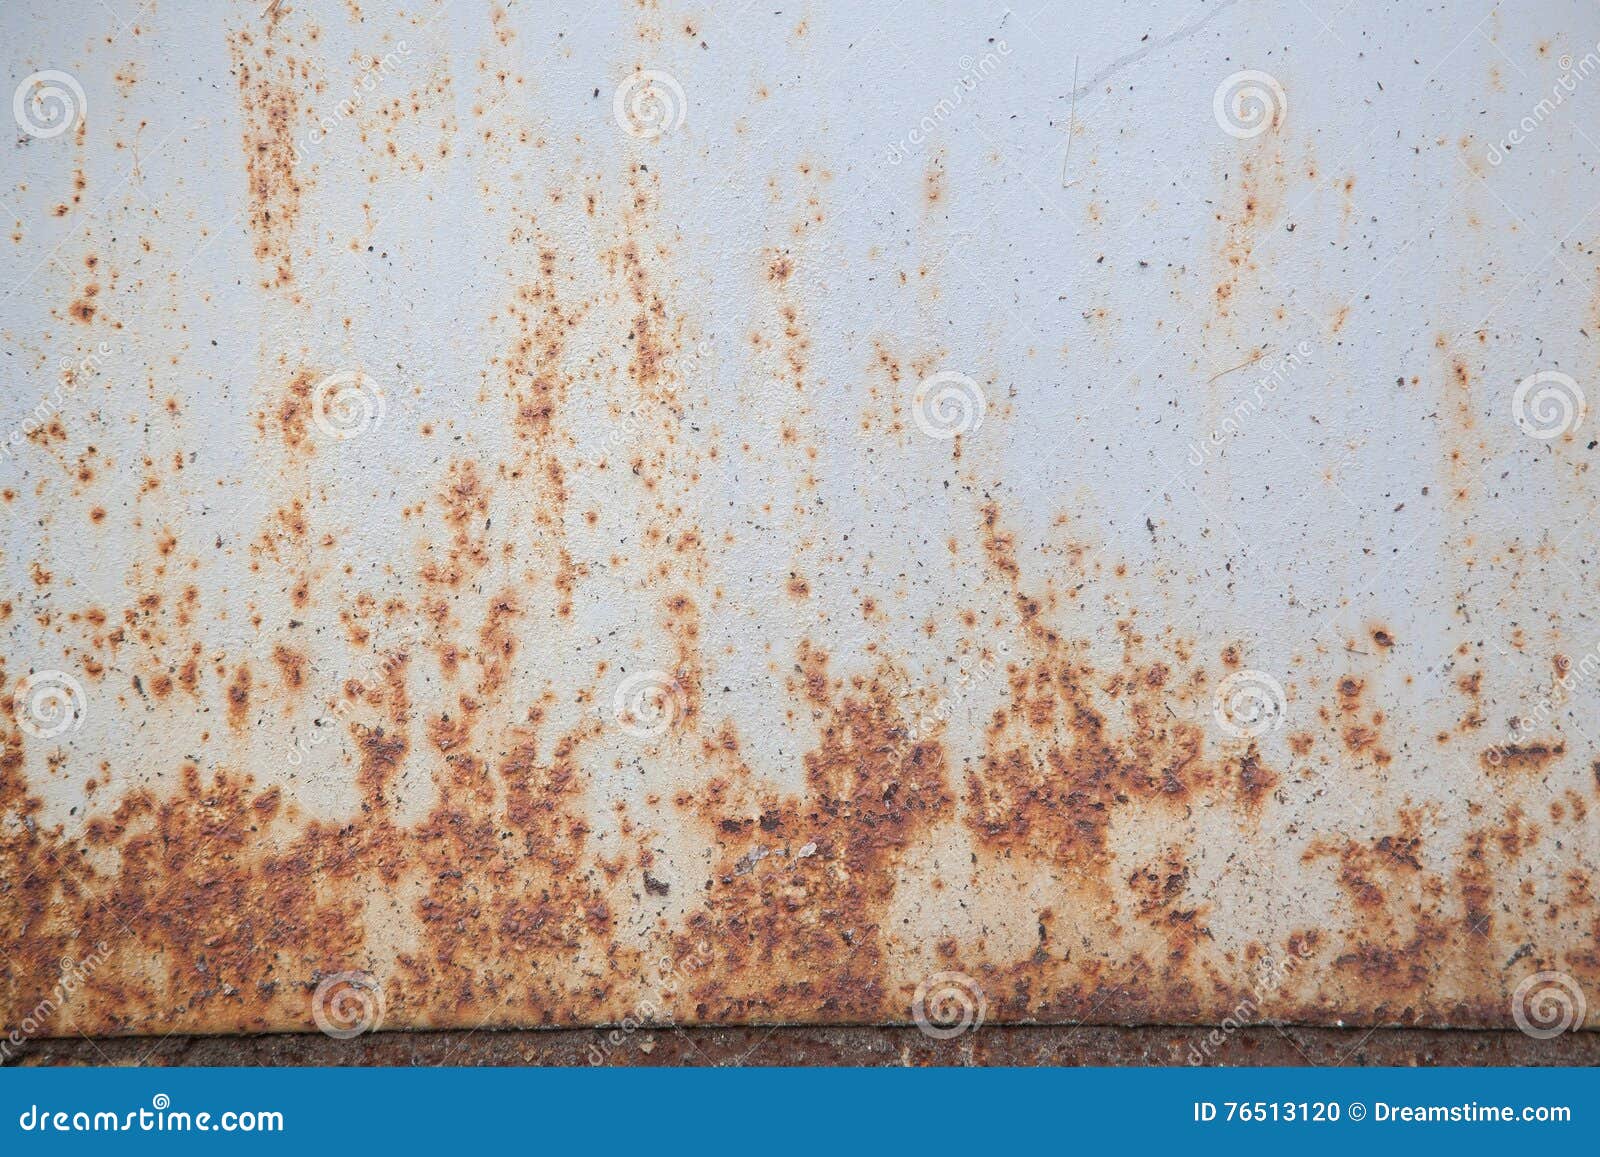 Rust on a wall фото 2